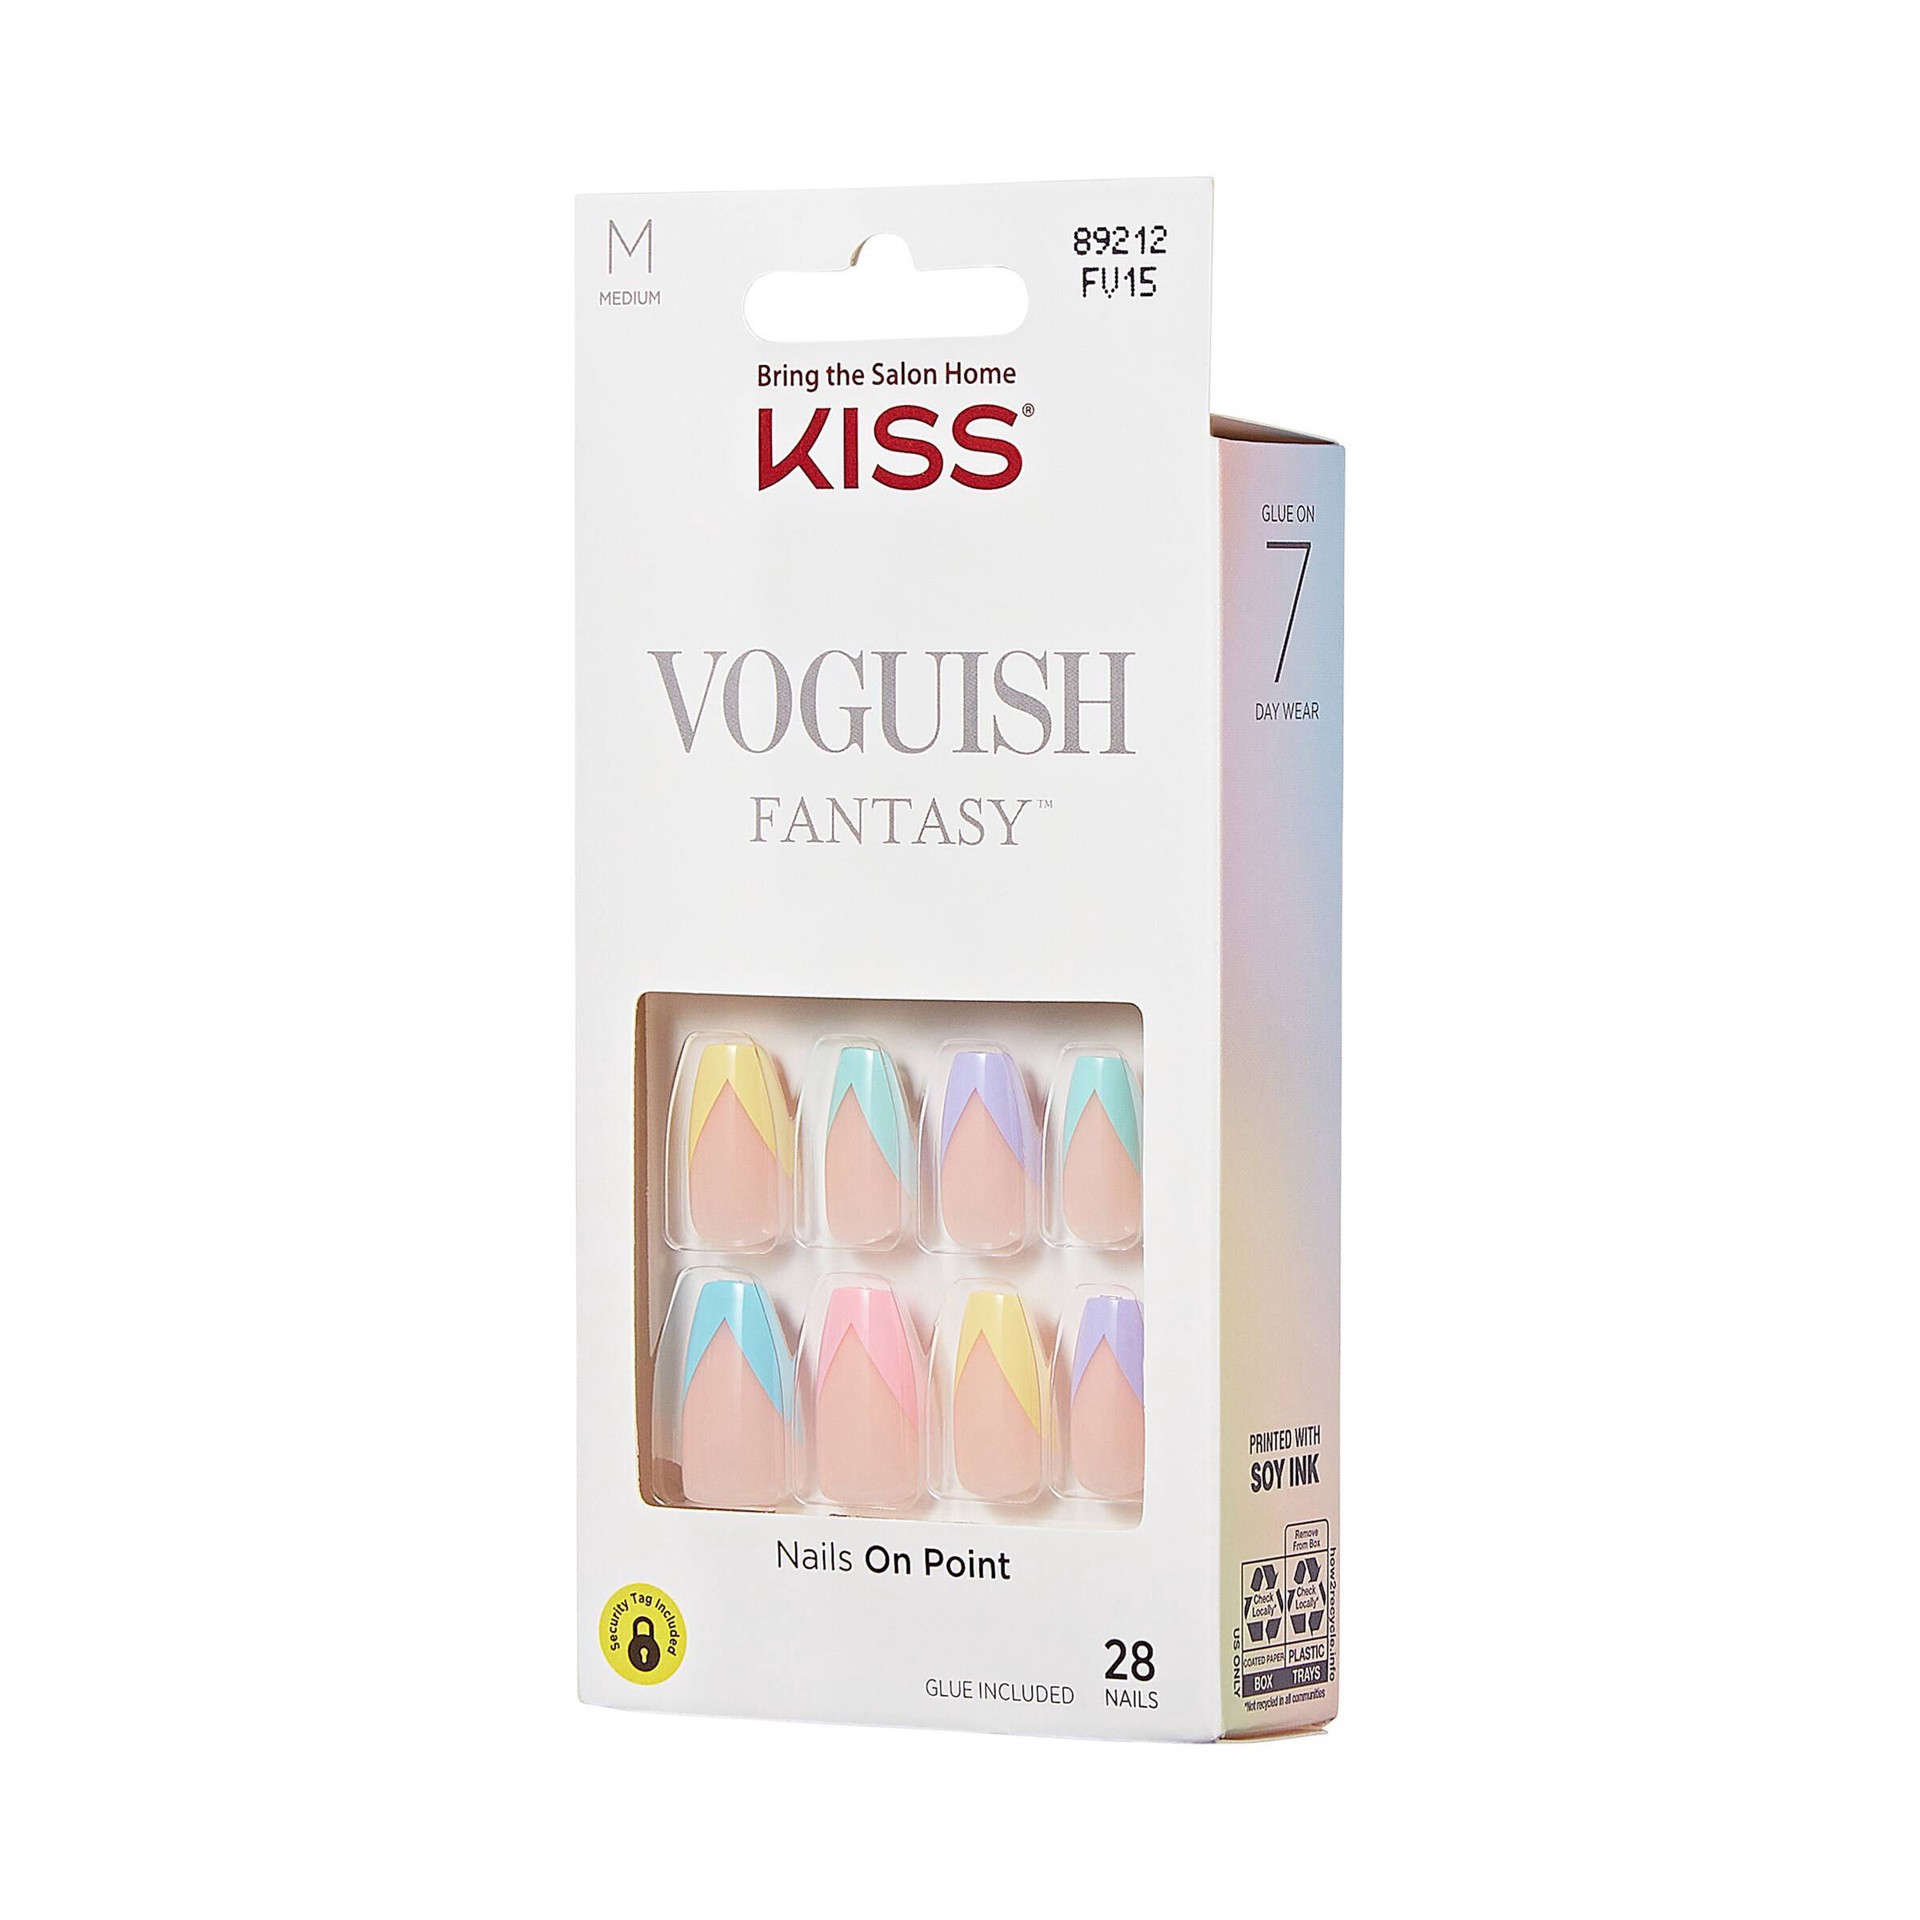 Kiss Voguish Fantasy Candies Nails 1 ct | Shipt